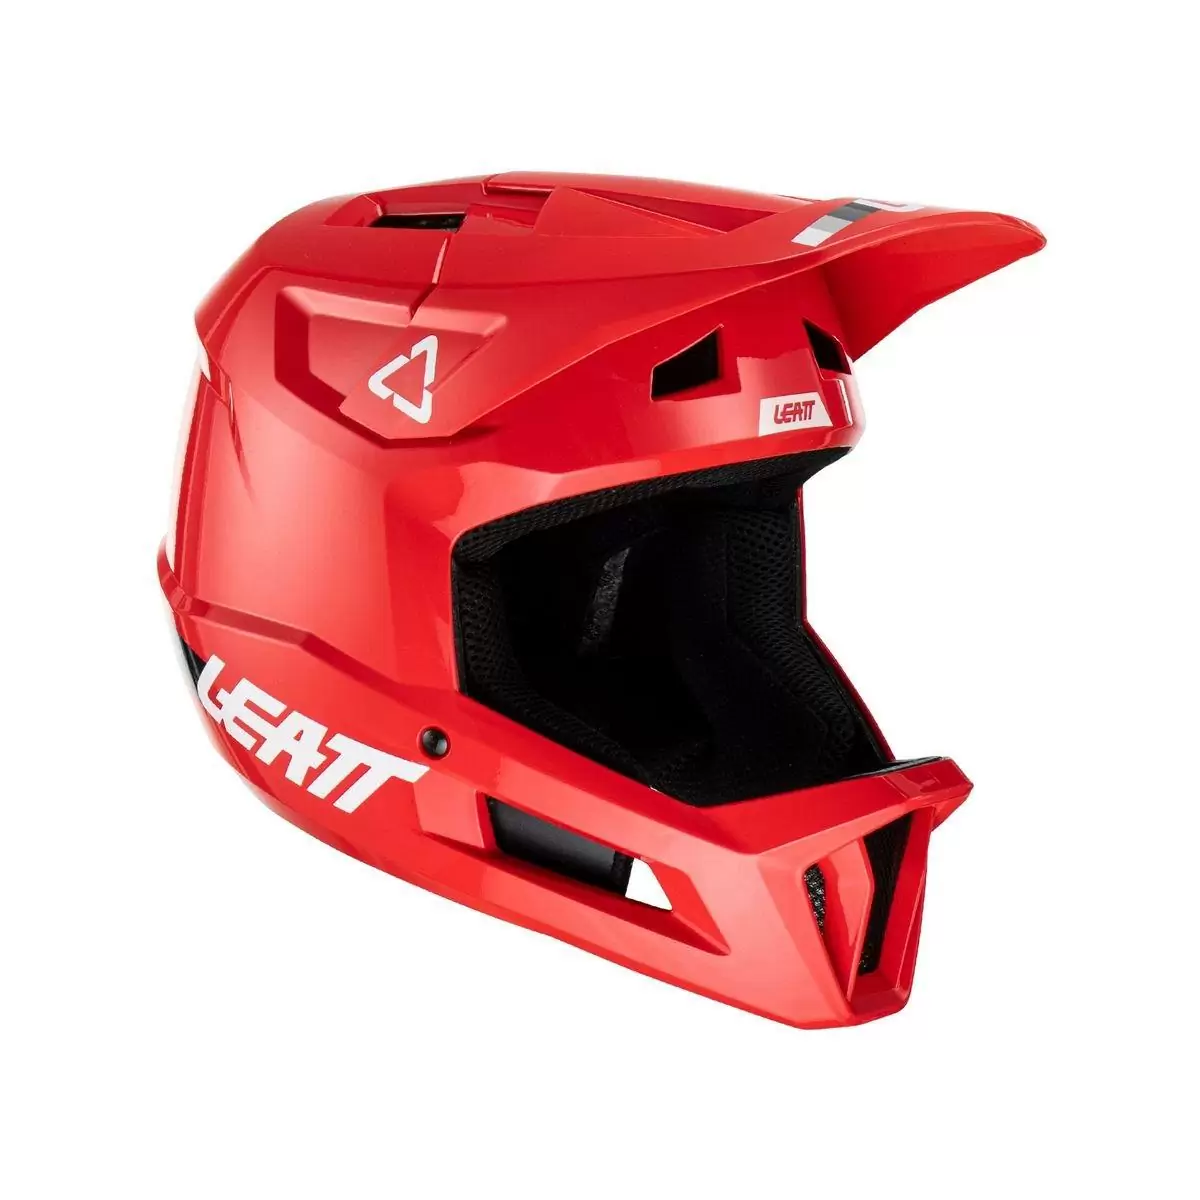 Gravity 1.0 Kids MTB Fullface Helmet Red Size XXS (51-52cm) #3